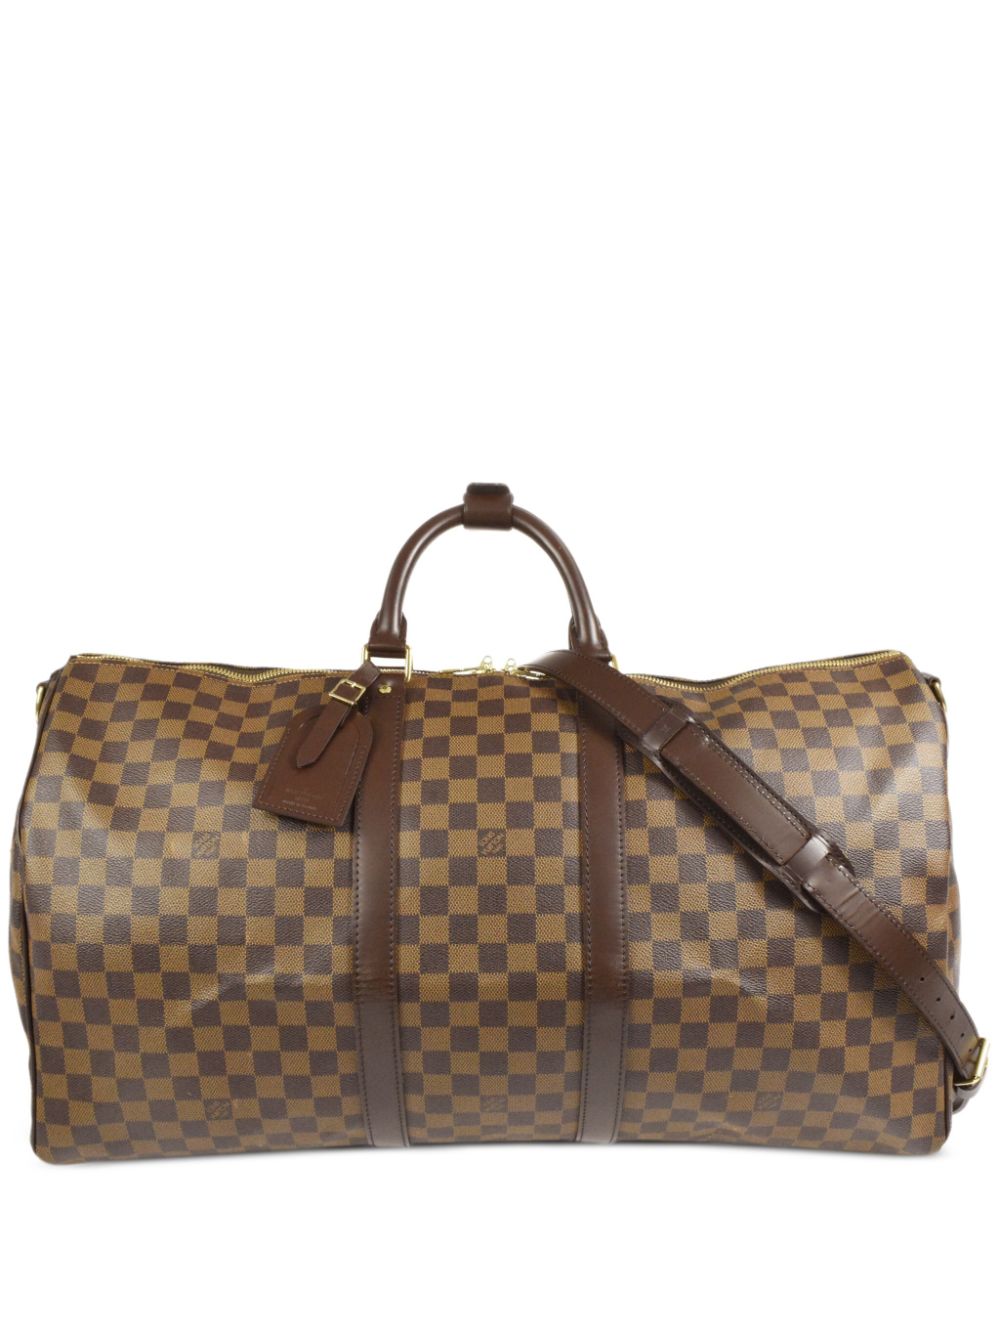 Louis Vuitton 2006 pre-owned Keepall 55 Travel Bag - Farfetch